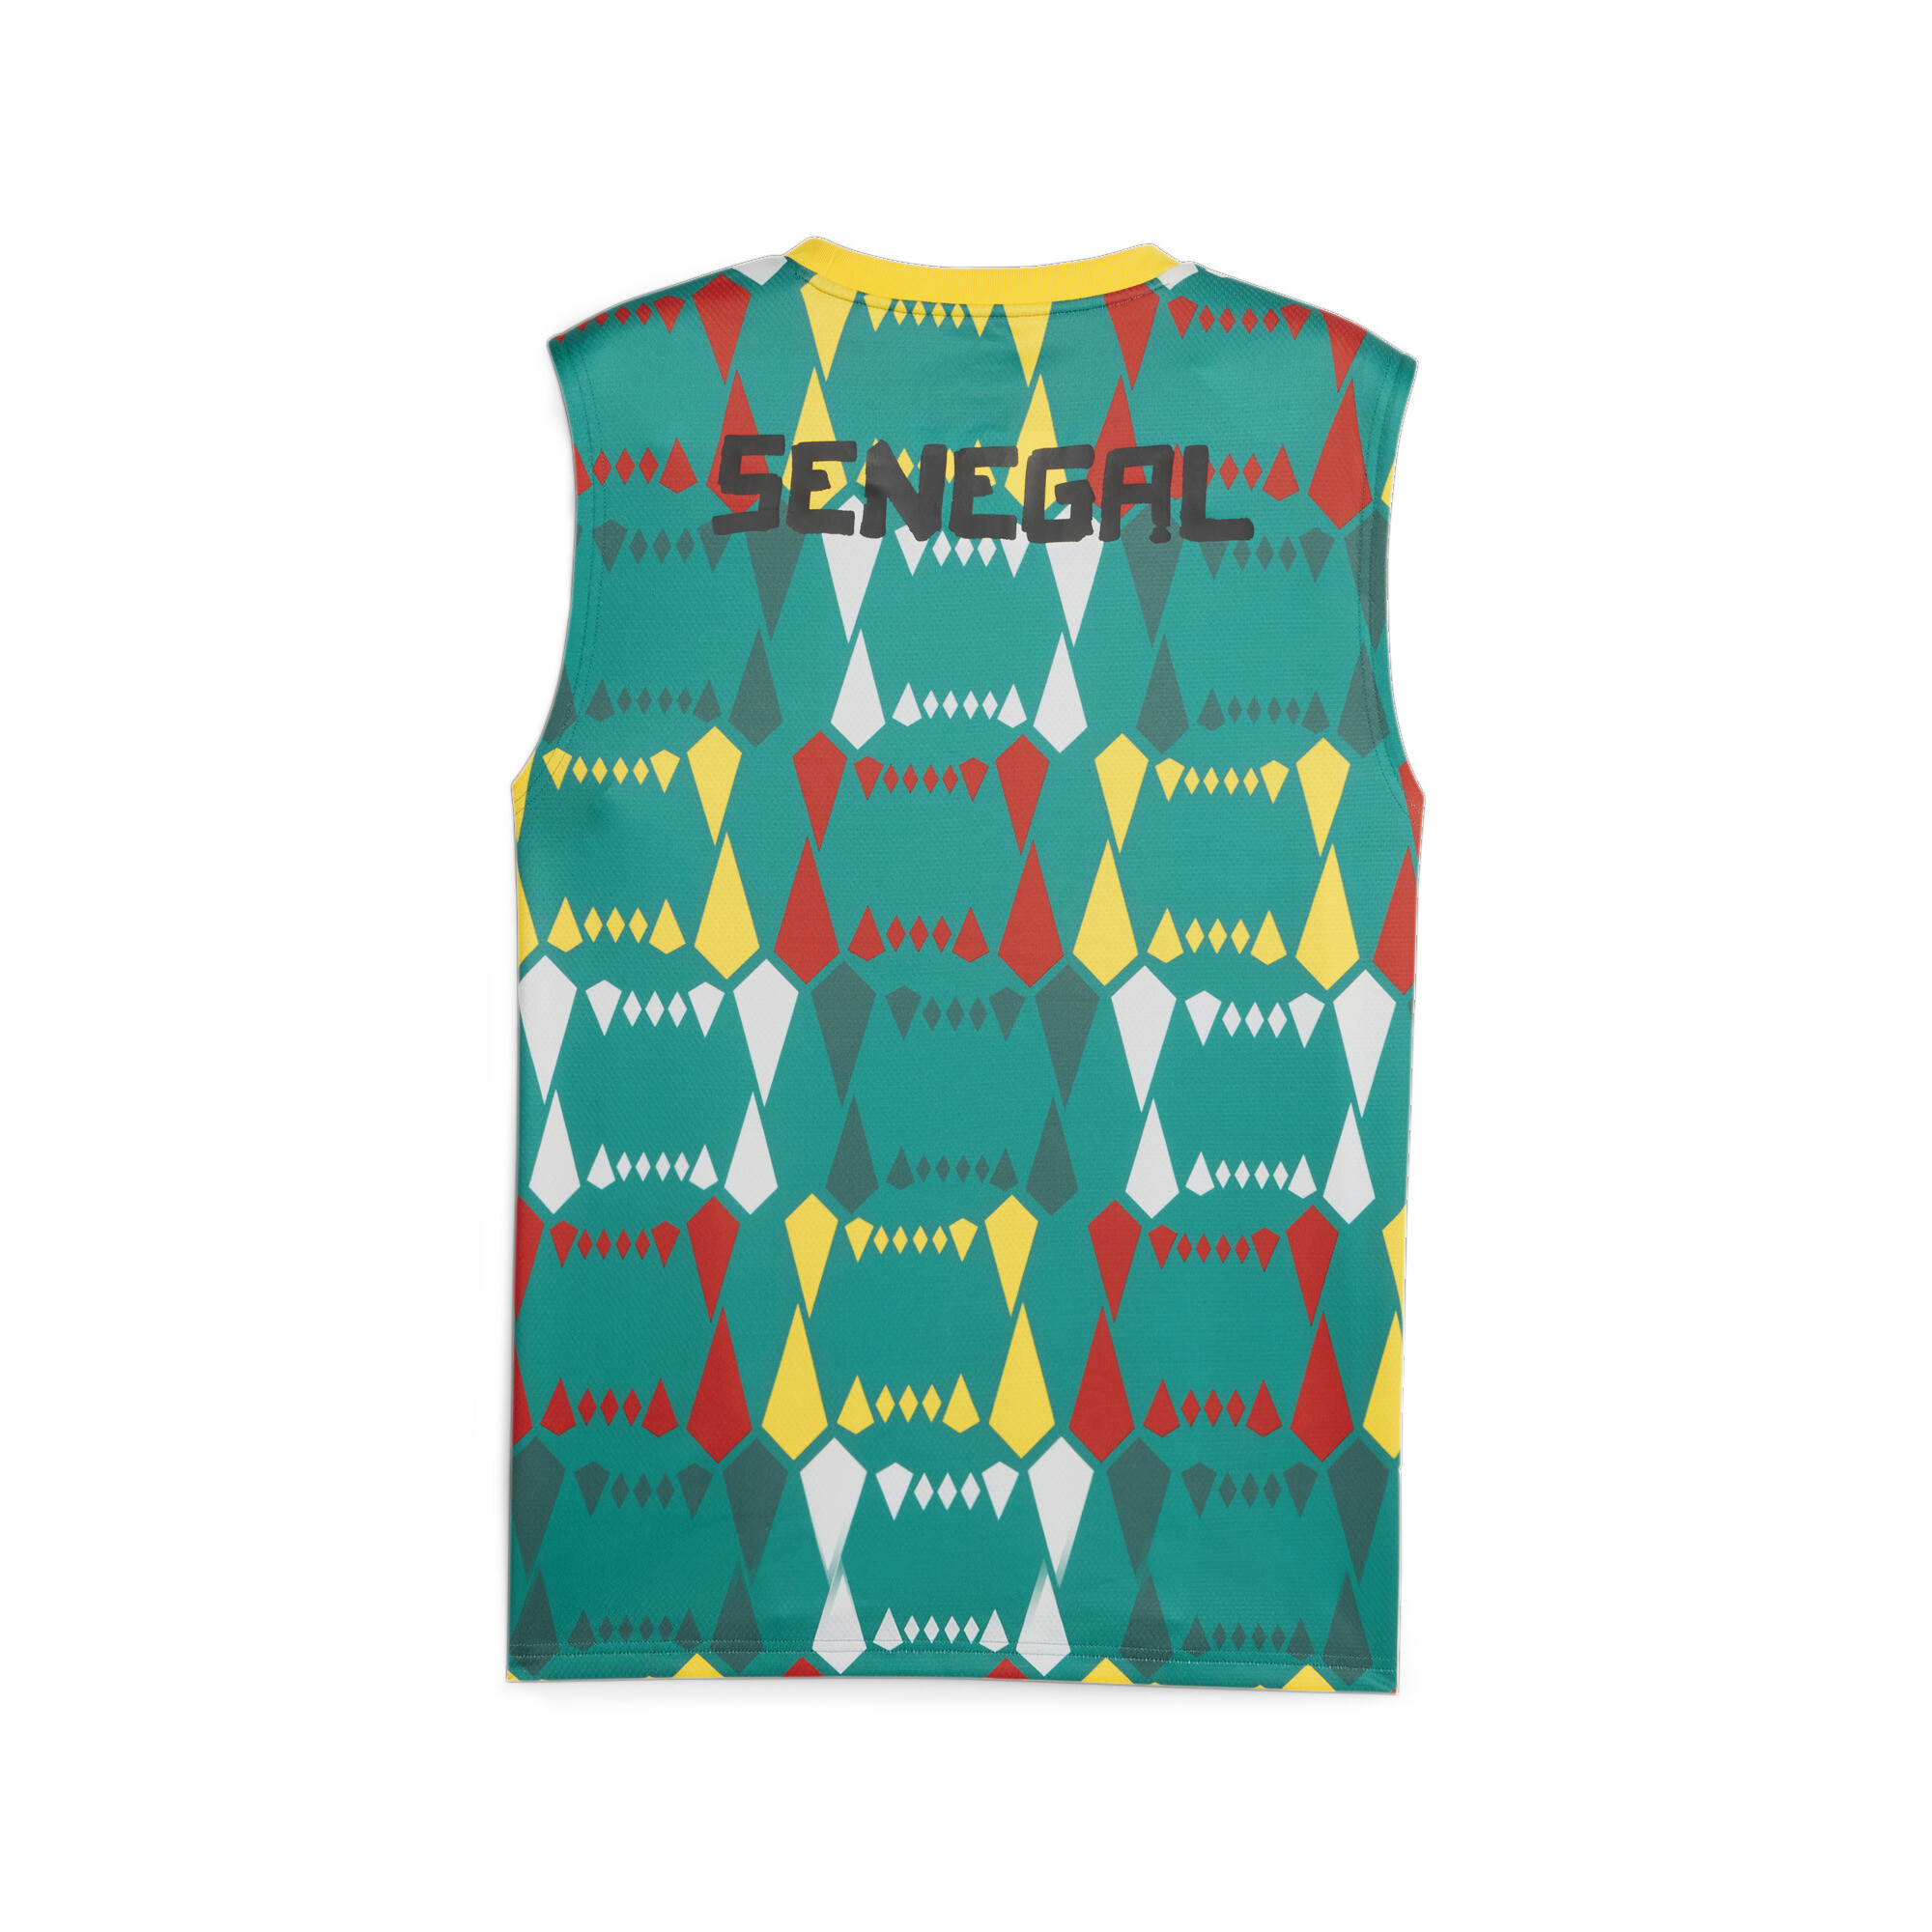 Men's PUMA Senegal FtblCulture Sleeveless Jersey In Green, Size Large